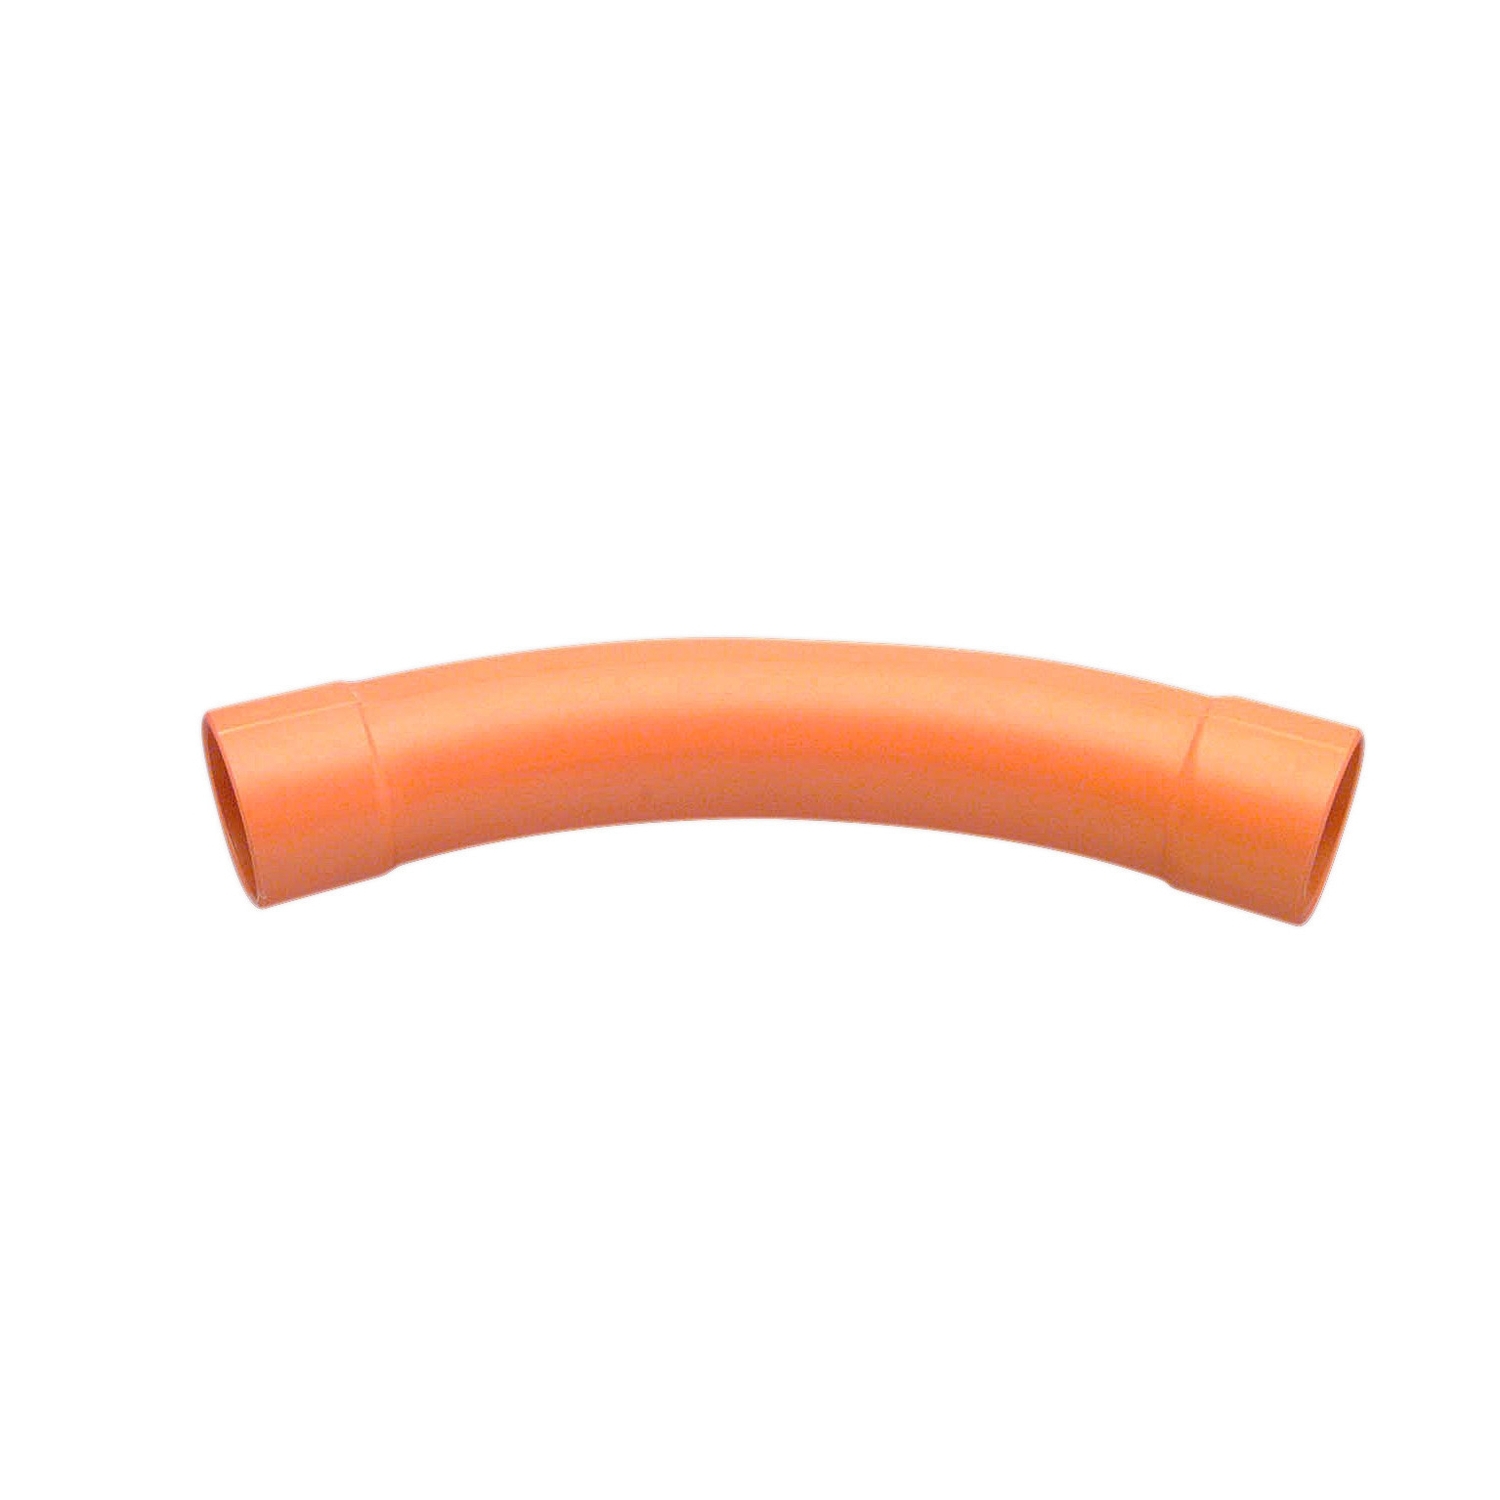 Solid Fittings - PVC, 45 Degree Heavy Duty Sweep Bends, 40mm, Orange